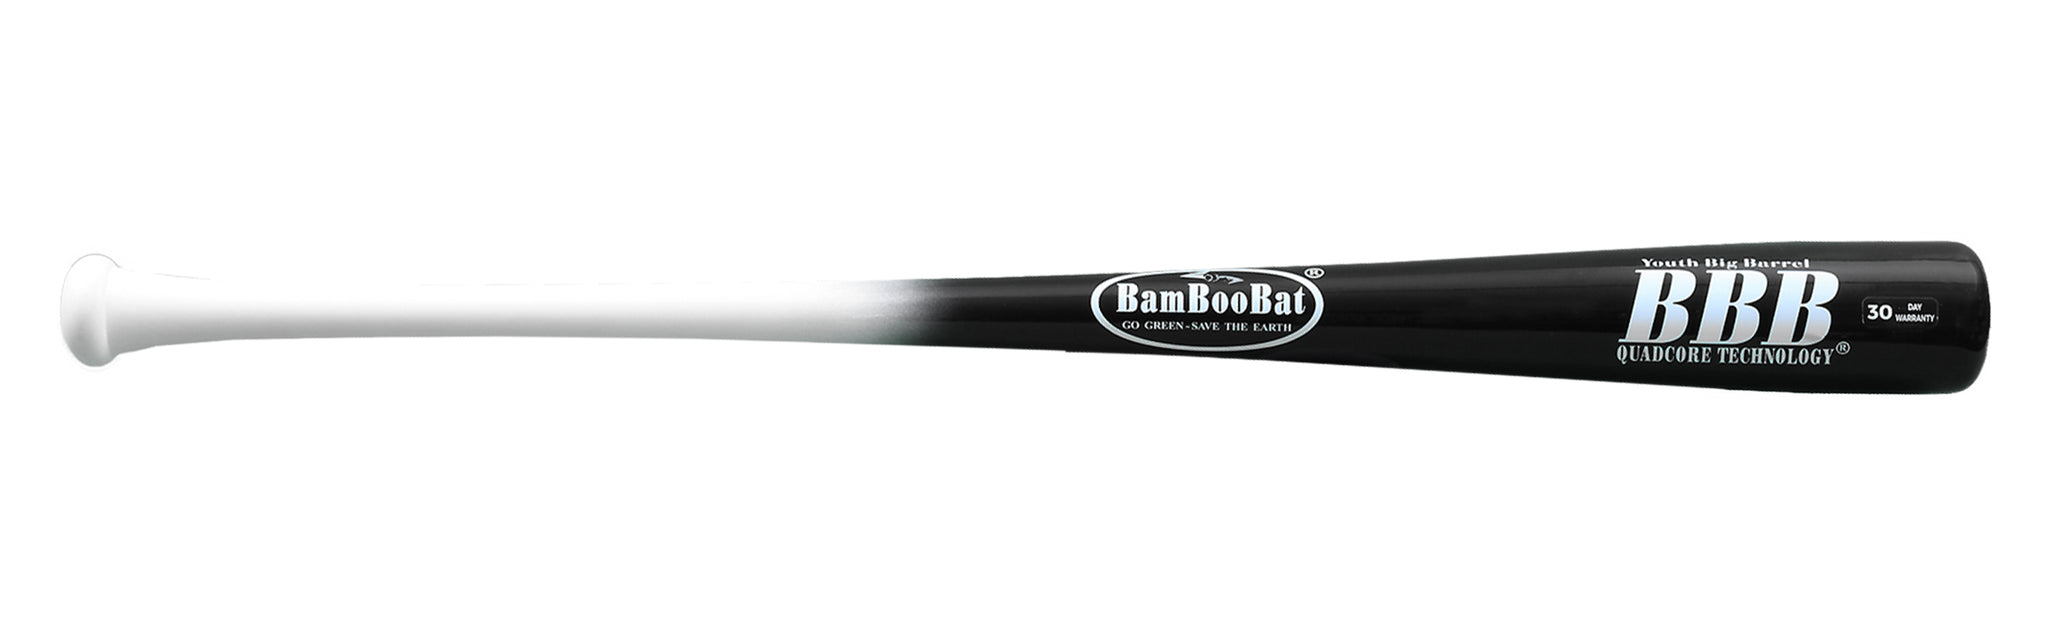 2 5/8 Inch Big Barrel Baseball Bat | BamBooBat – BamBooBat.com